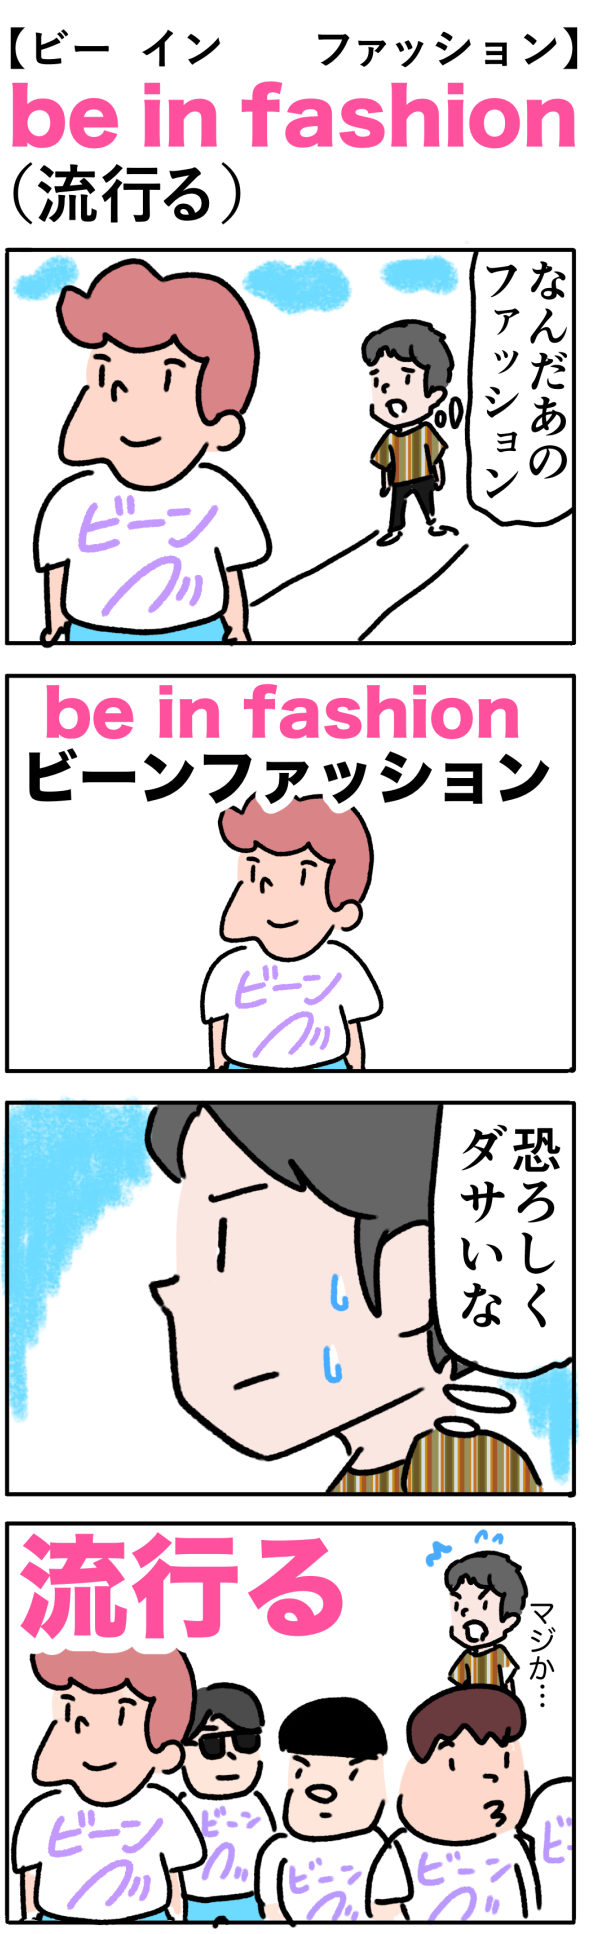 be in fashion（流行る）の語呂合わせ英単語